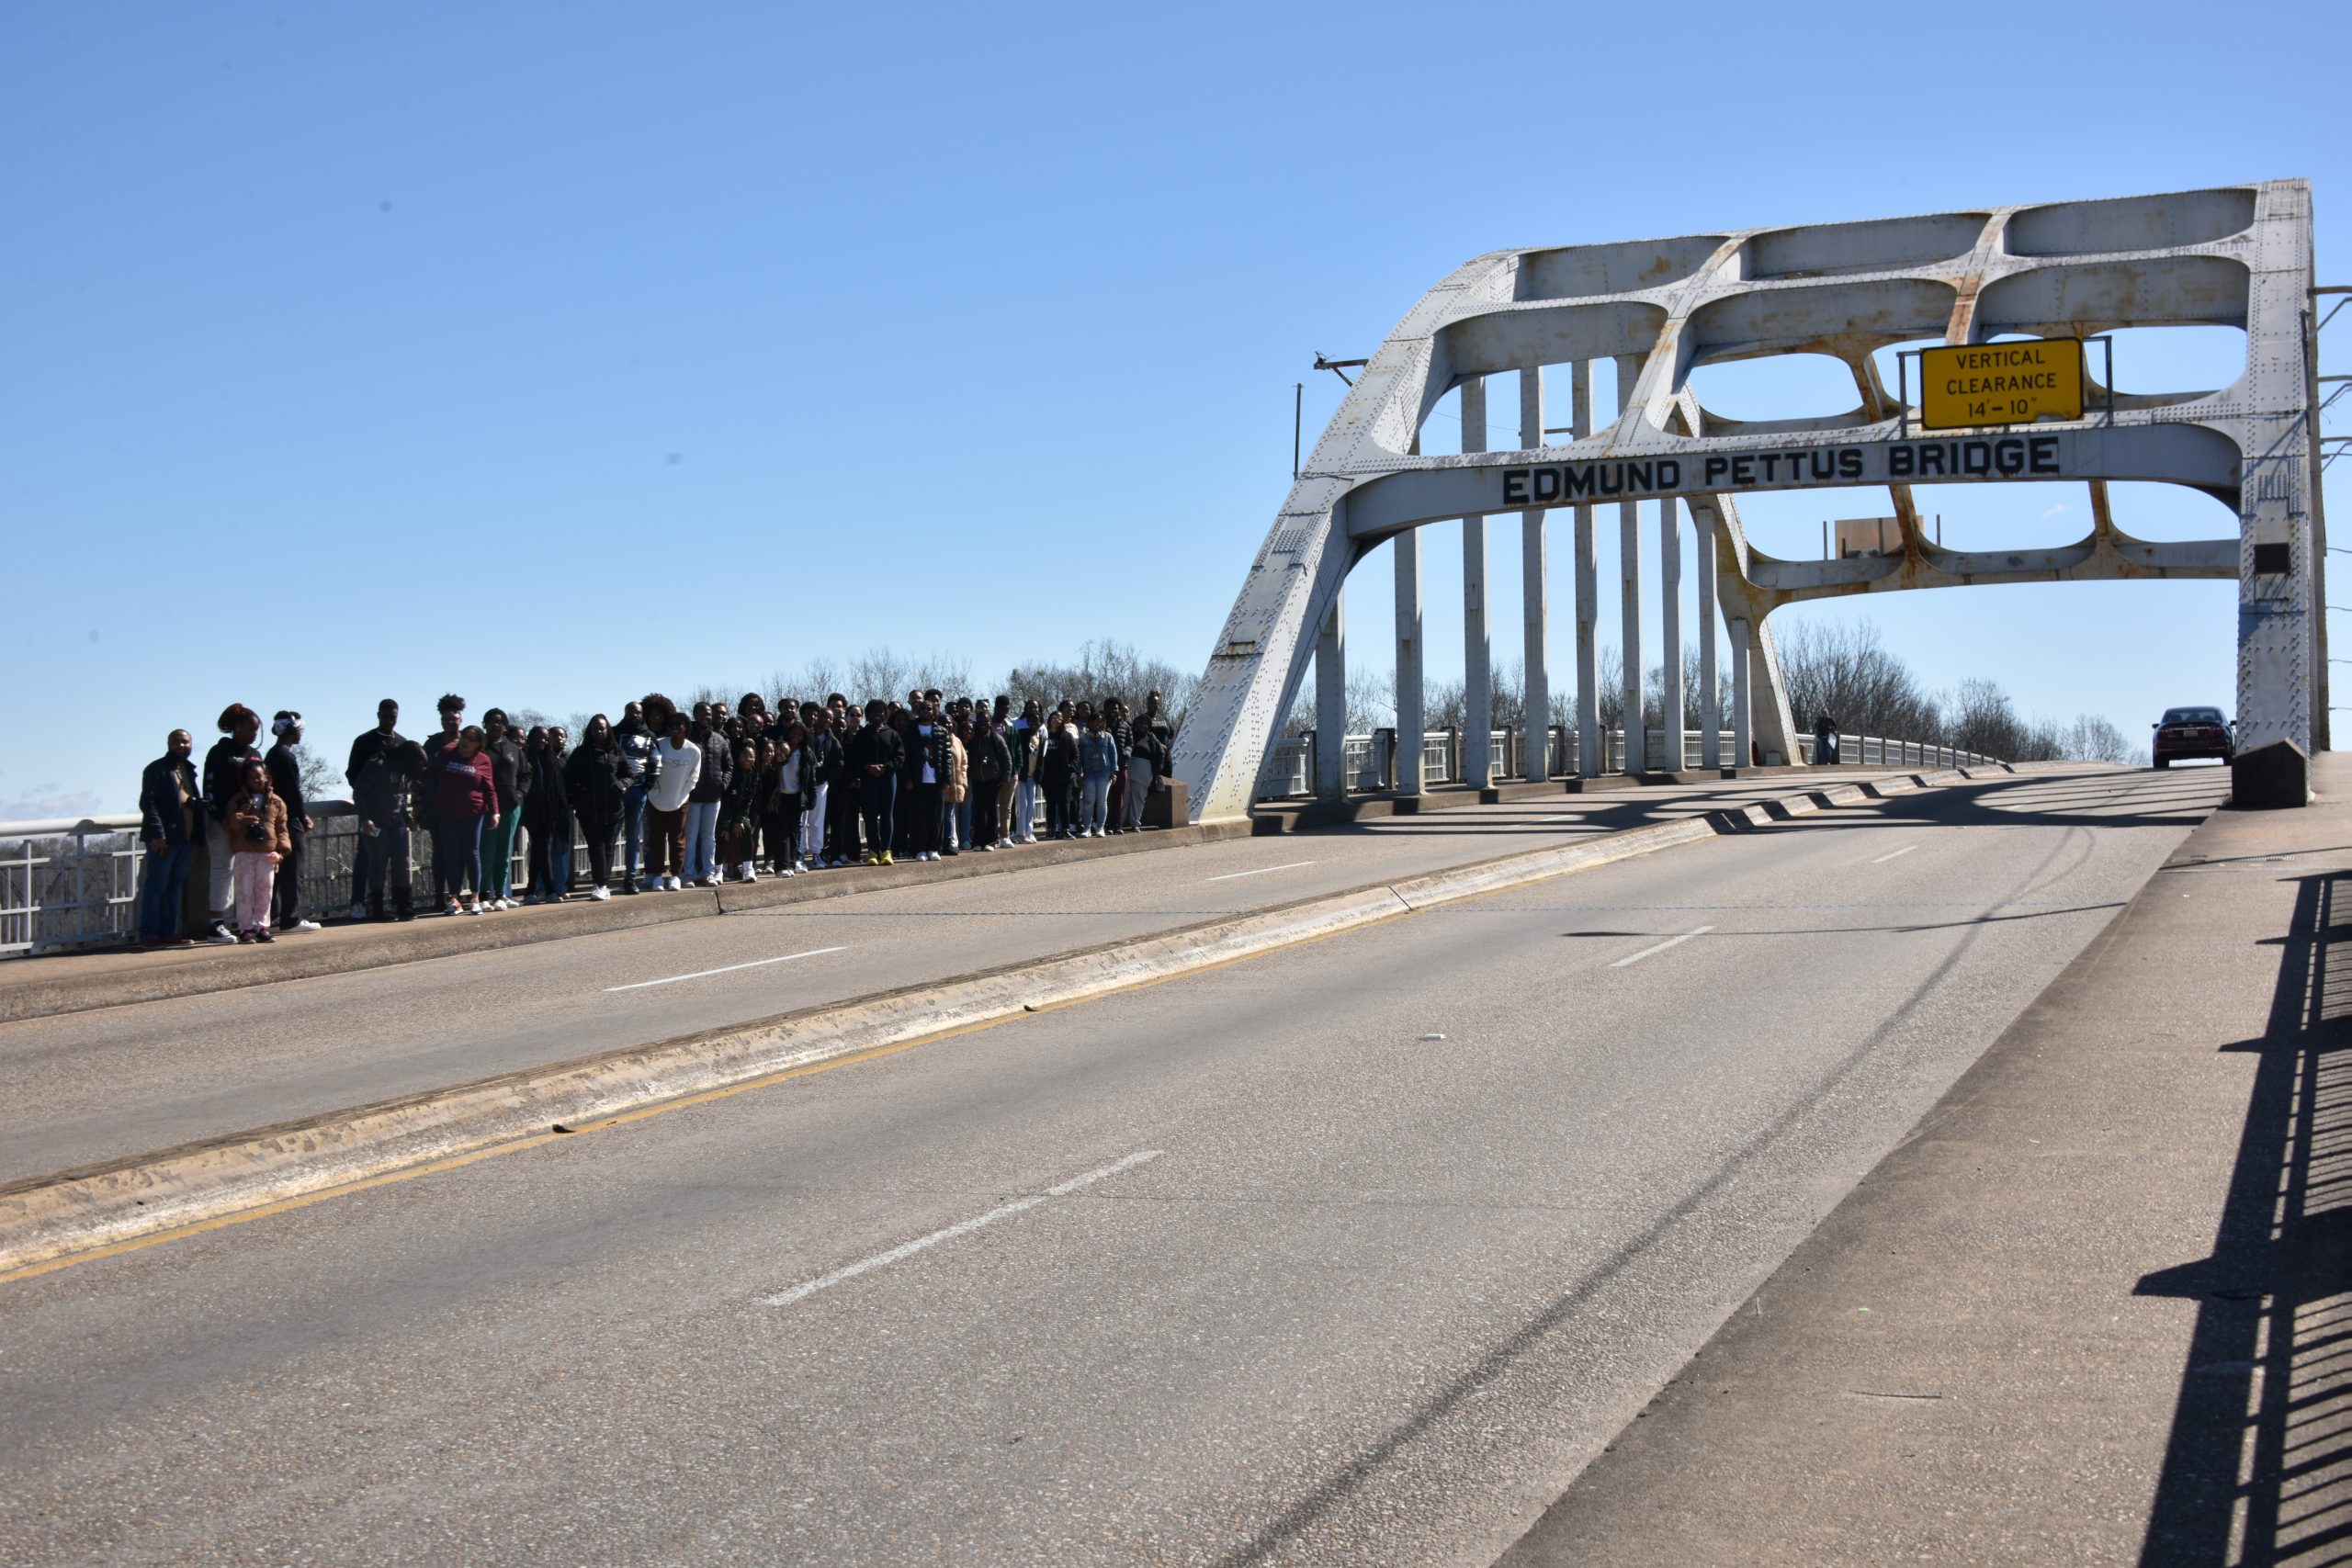 Excursion participants crossing the historic Edmund Pettus Bridge.